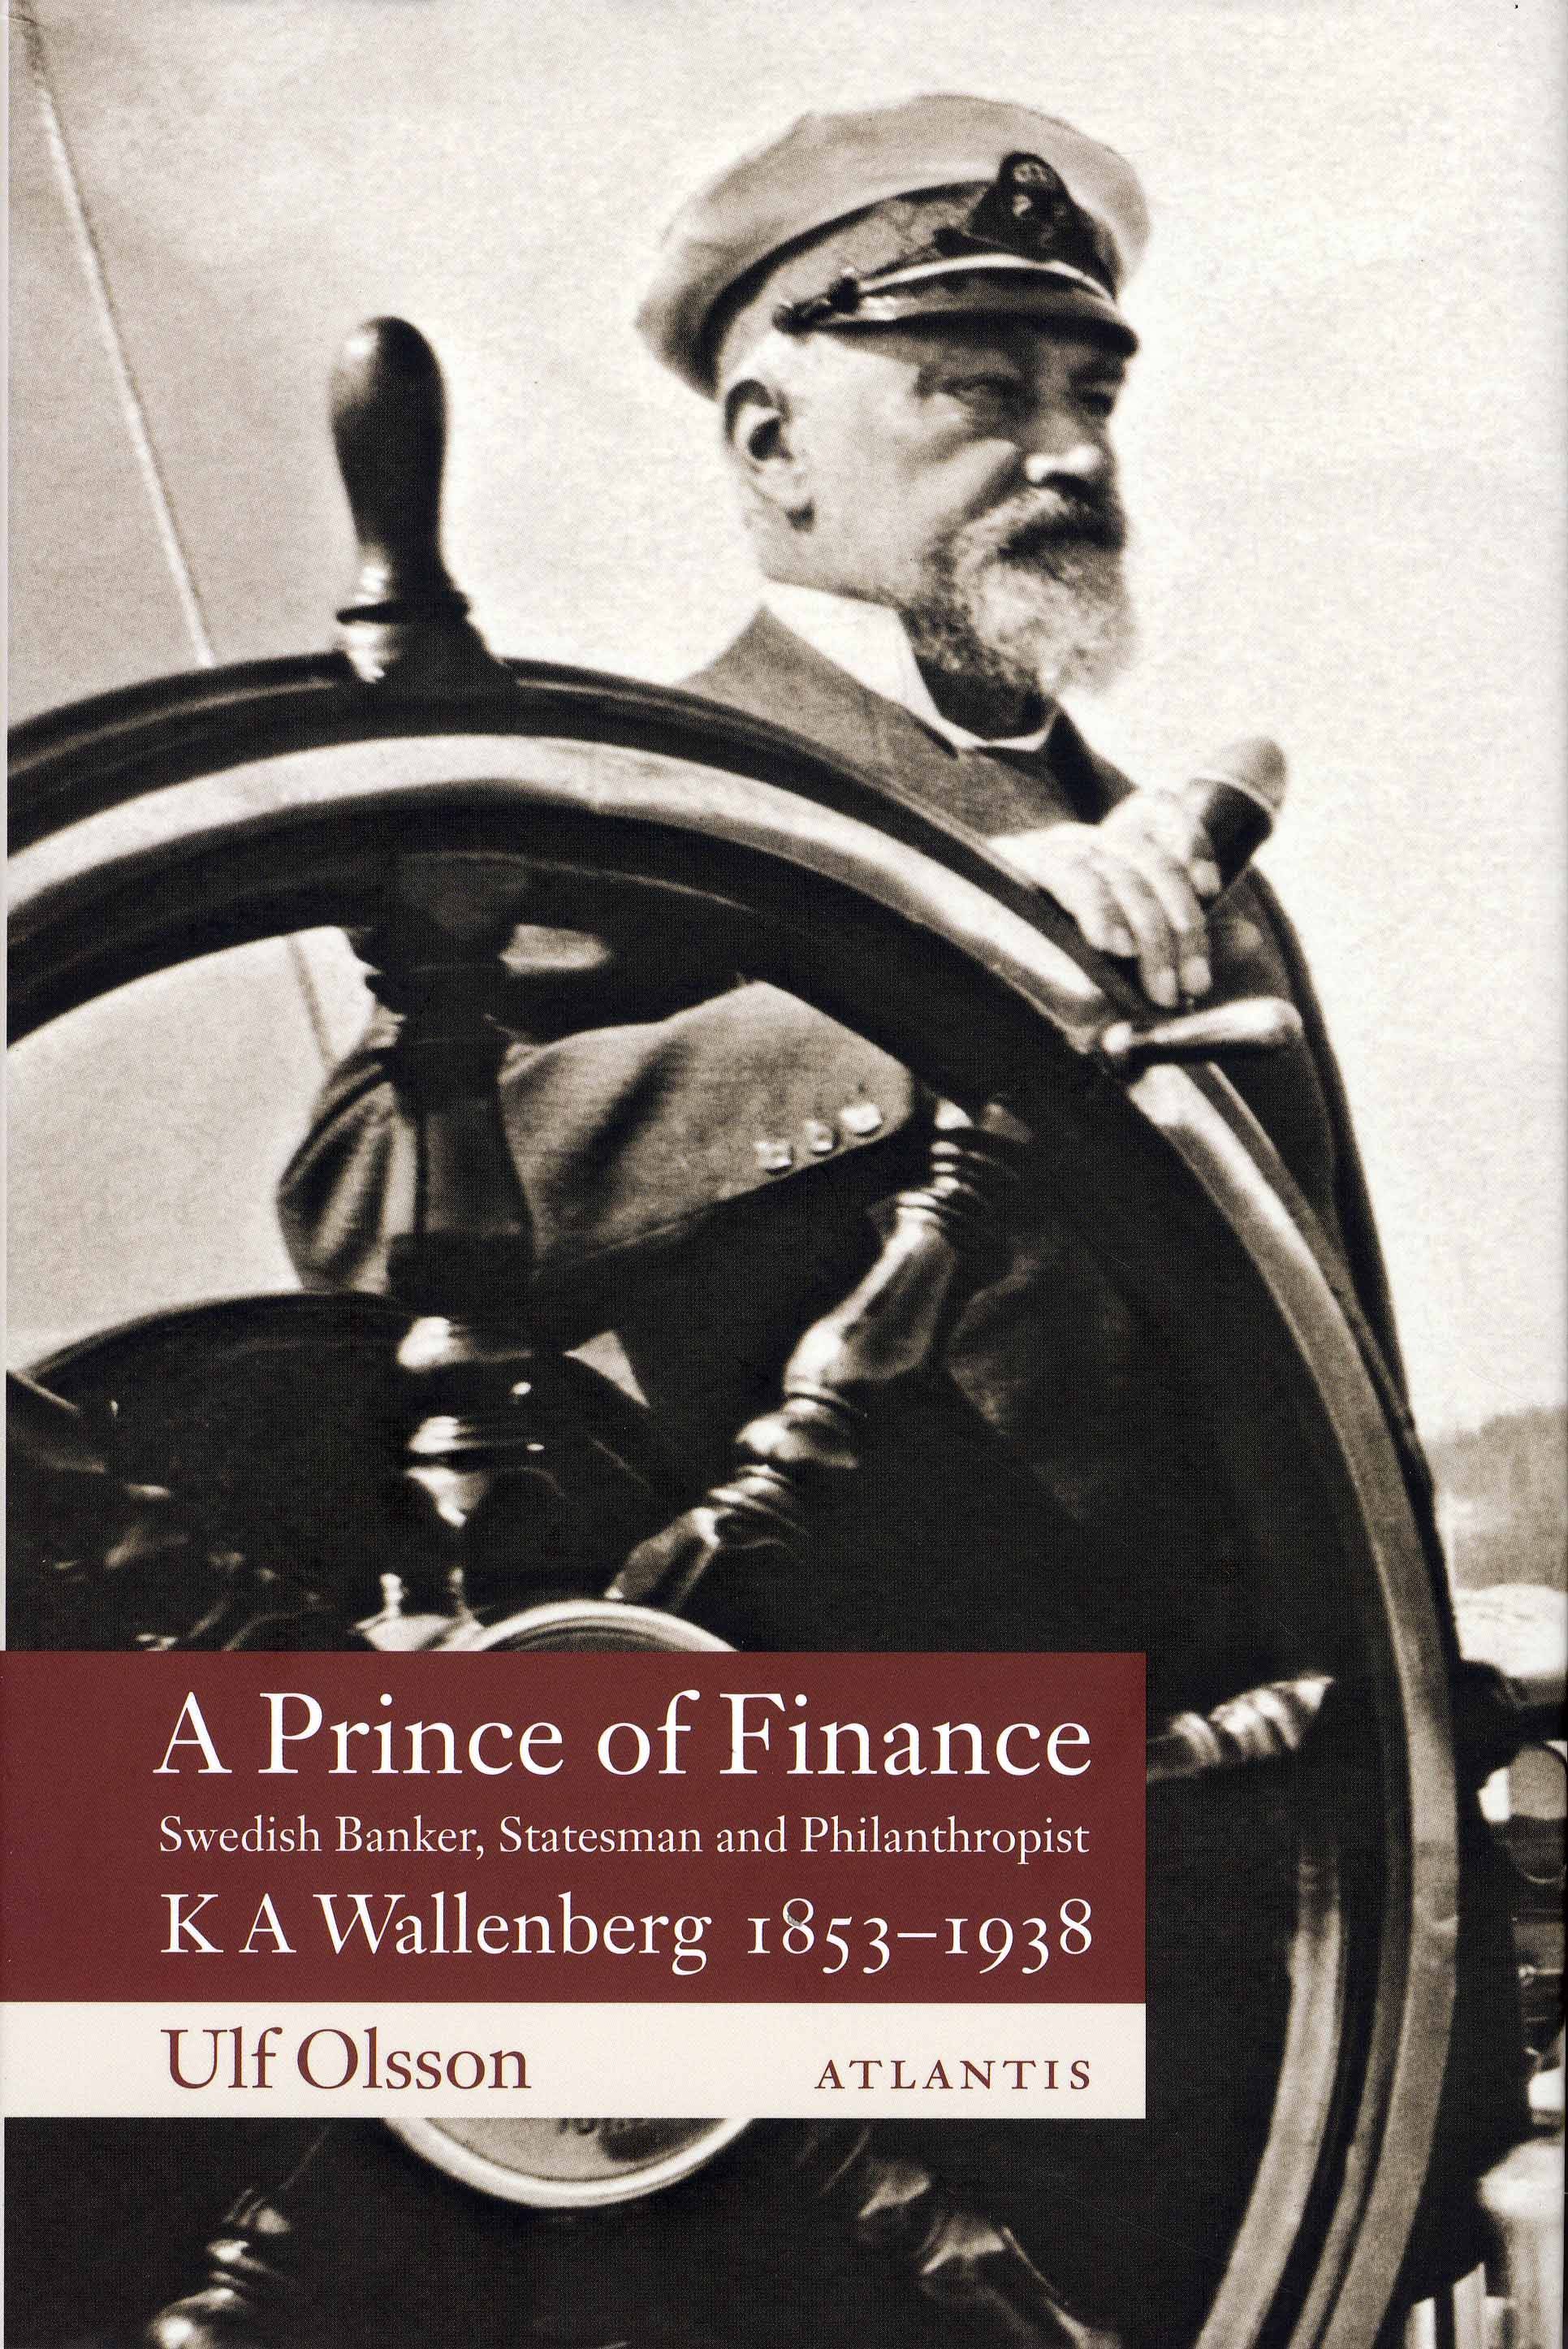 A prince of finance : K A Wallenberg 1853-1938 : Swedish banker, statesman and philanthropist